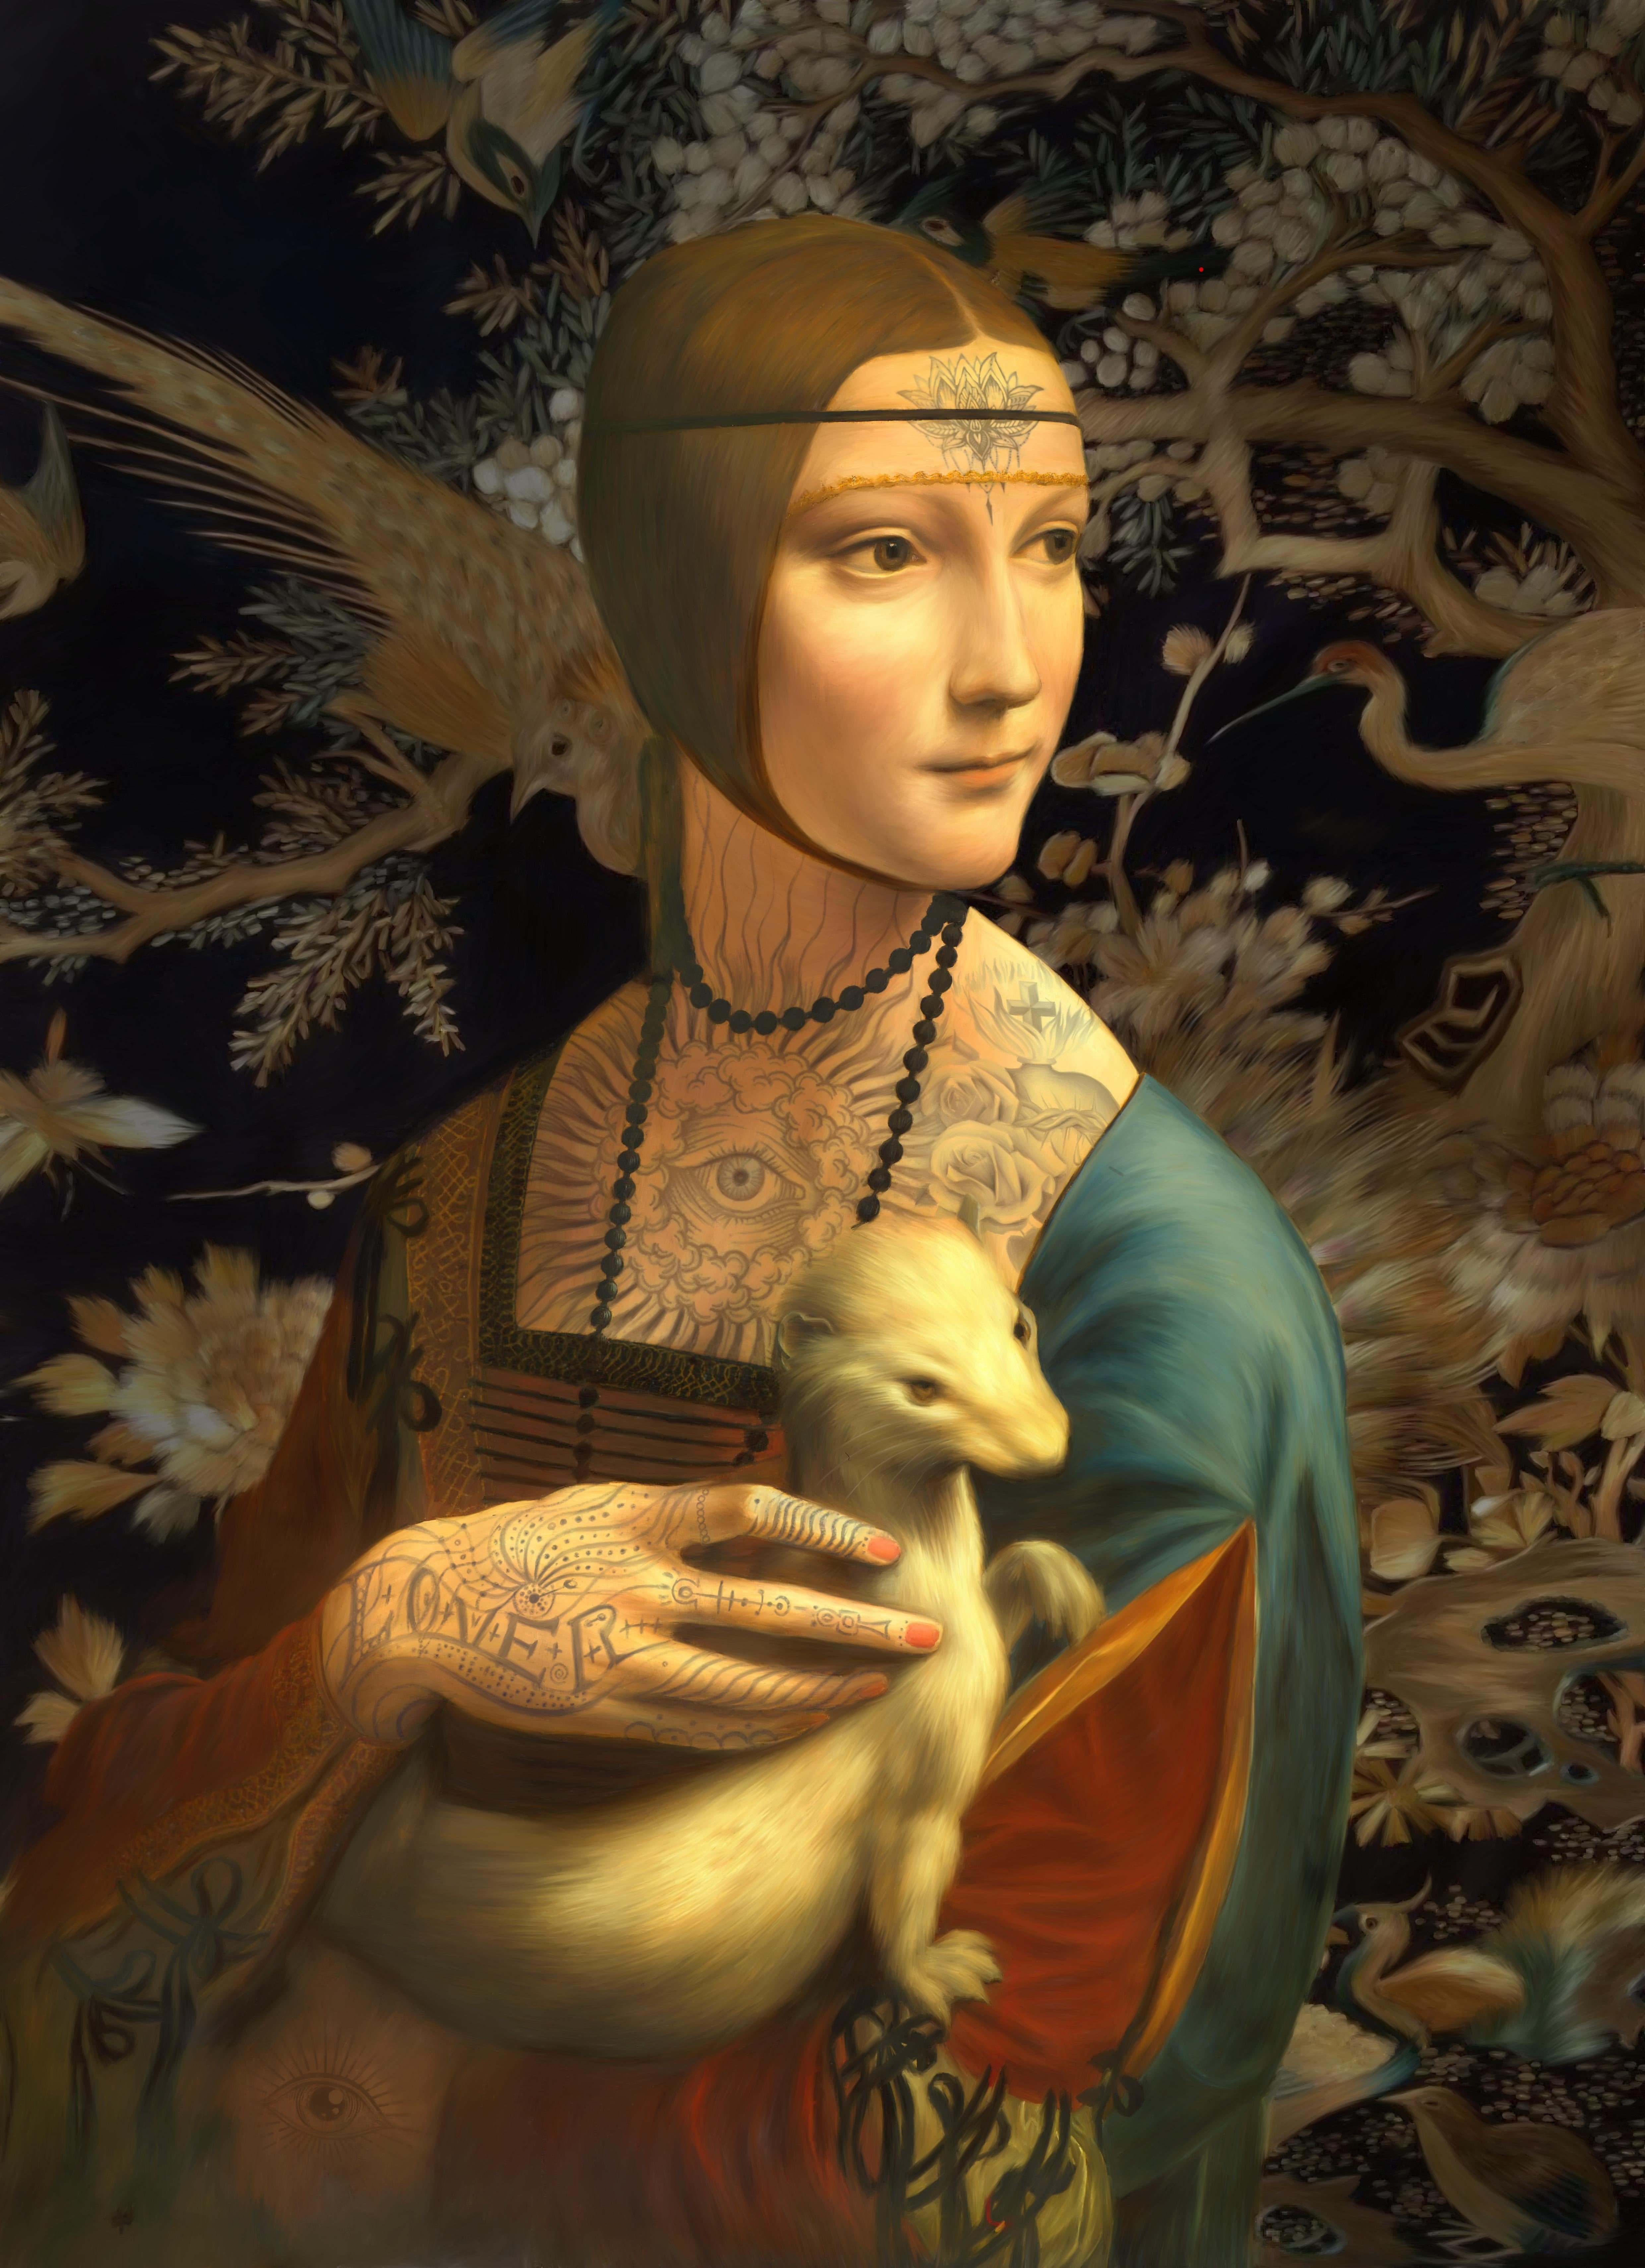 The Ink Lady. Based on the portrait Lady with an ermine, by Leonardo da Vinci.